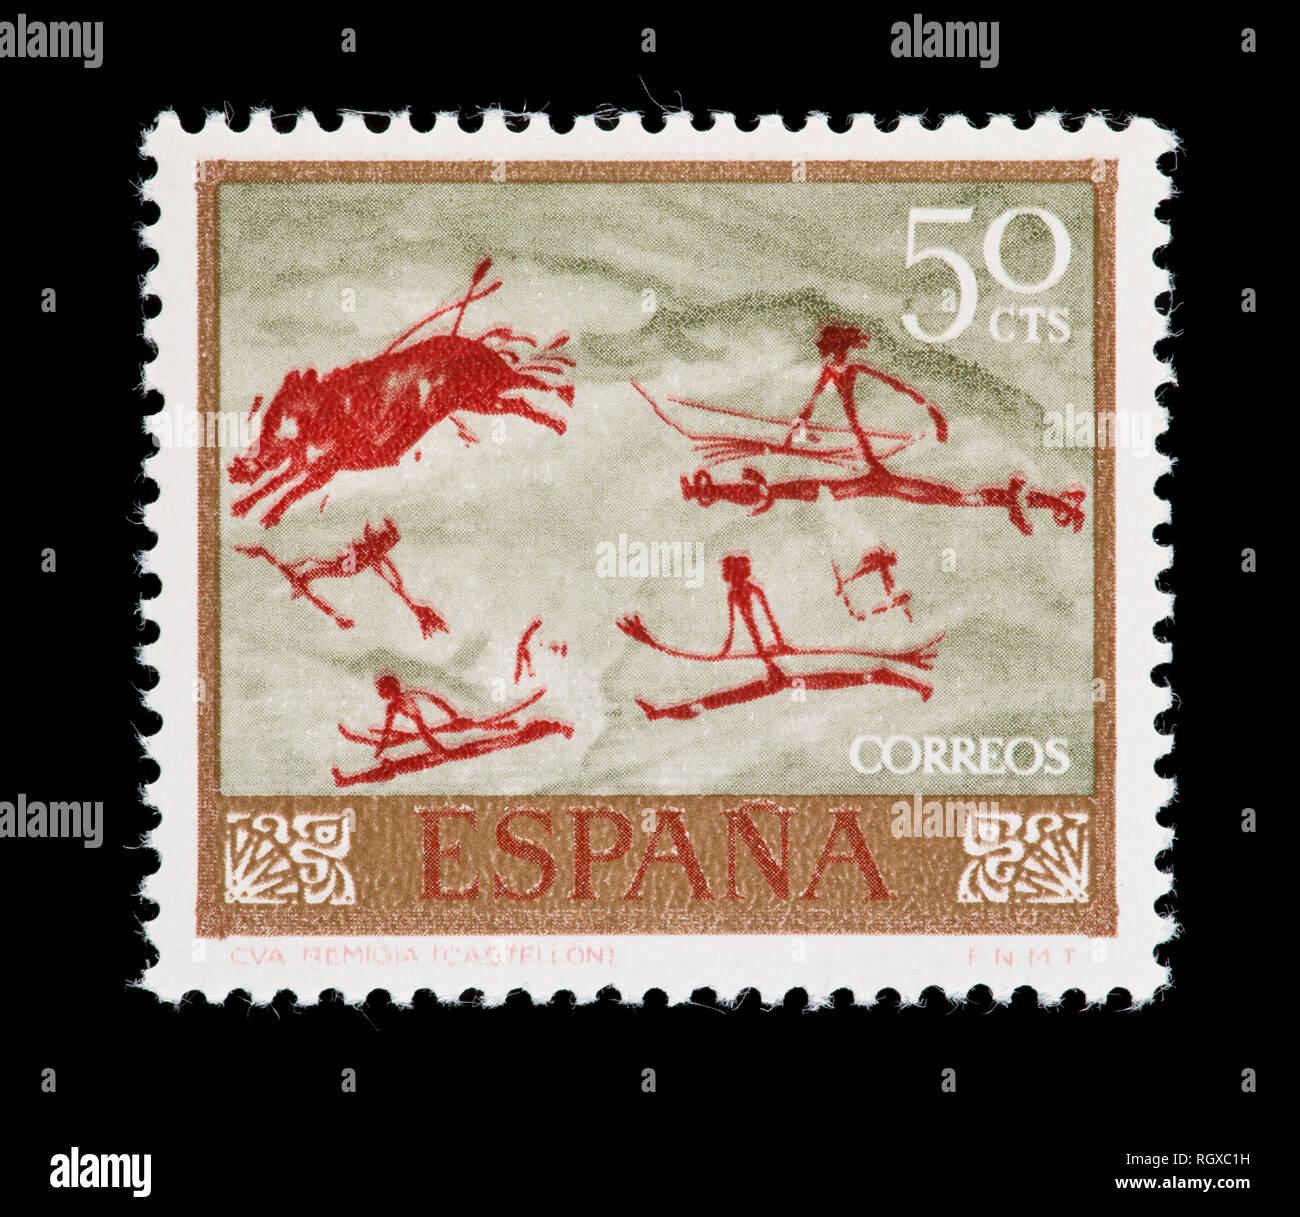 Timbre d'Espagne représentant un ornamentt l'art rupestre, de la pré-historique d'habitants. Banque D'Images